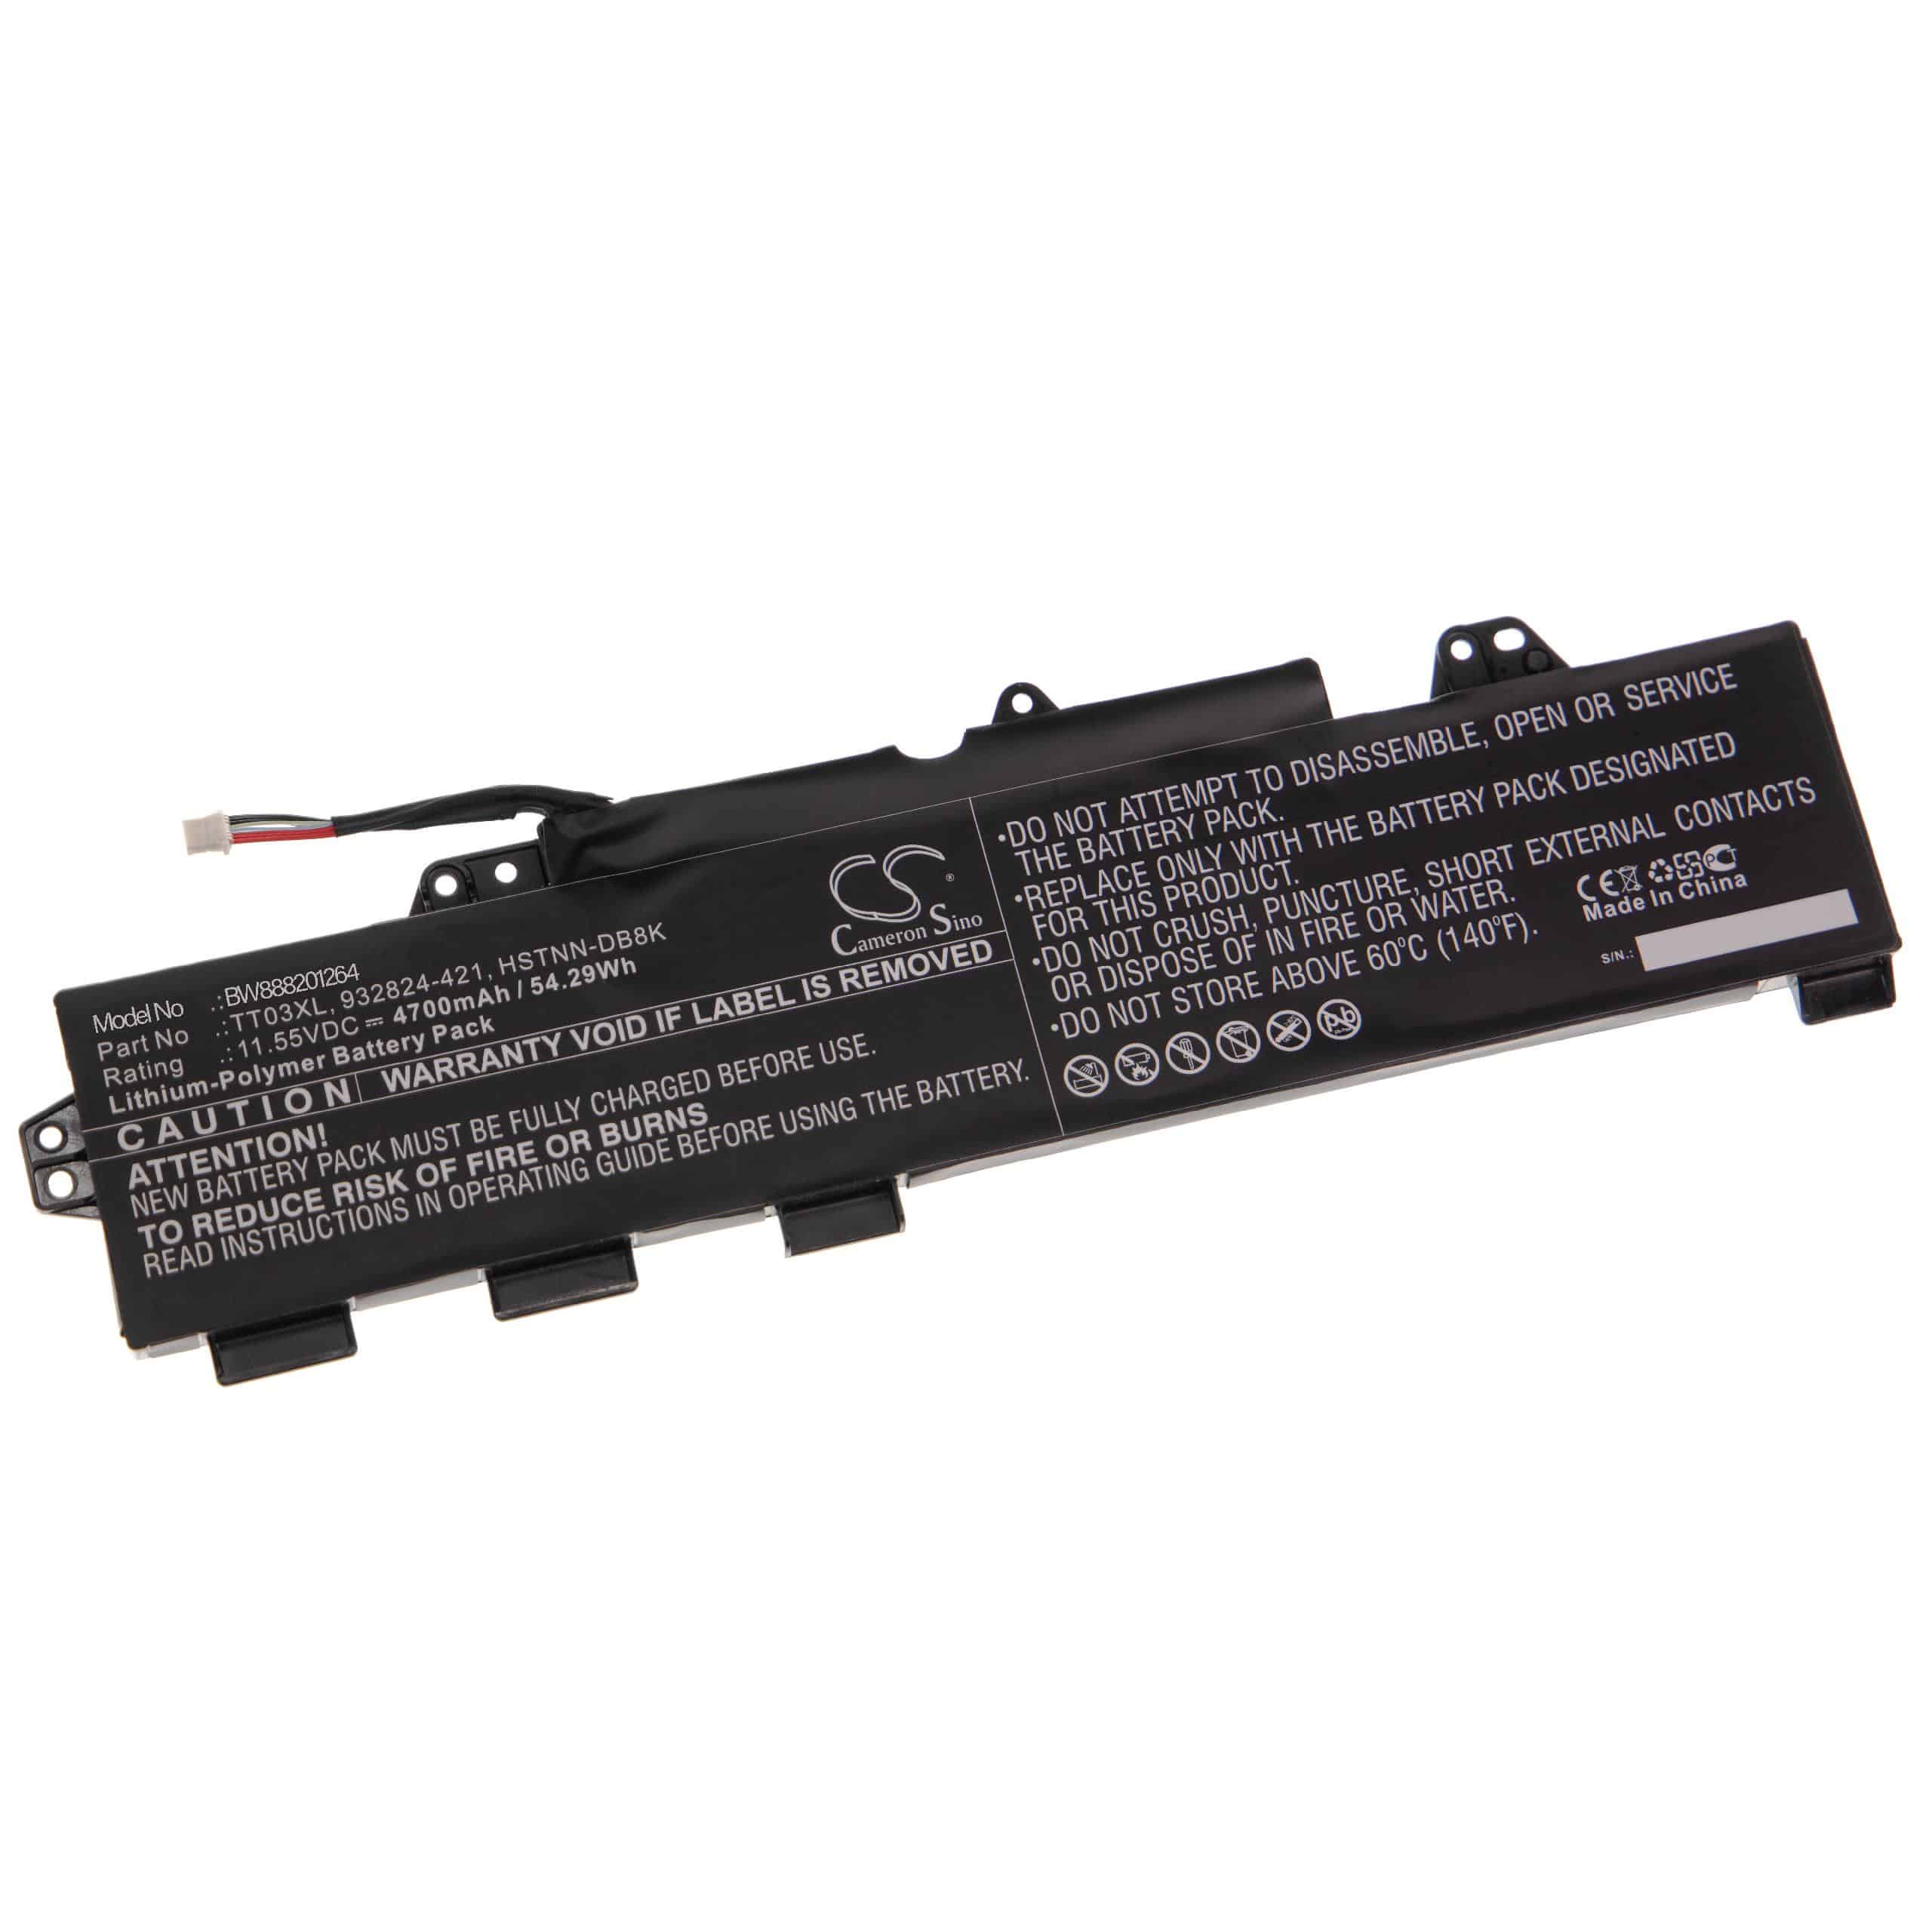 Akumulator do laptopa zamiennik HP 932824-2C1, 932824-1C1, 3RS08UT#ABA - 4700 mAh 11,55 V LiPo, czarny